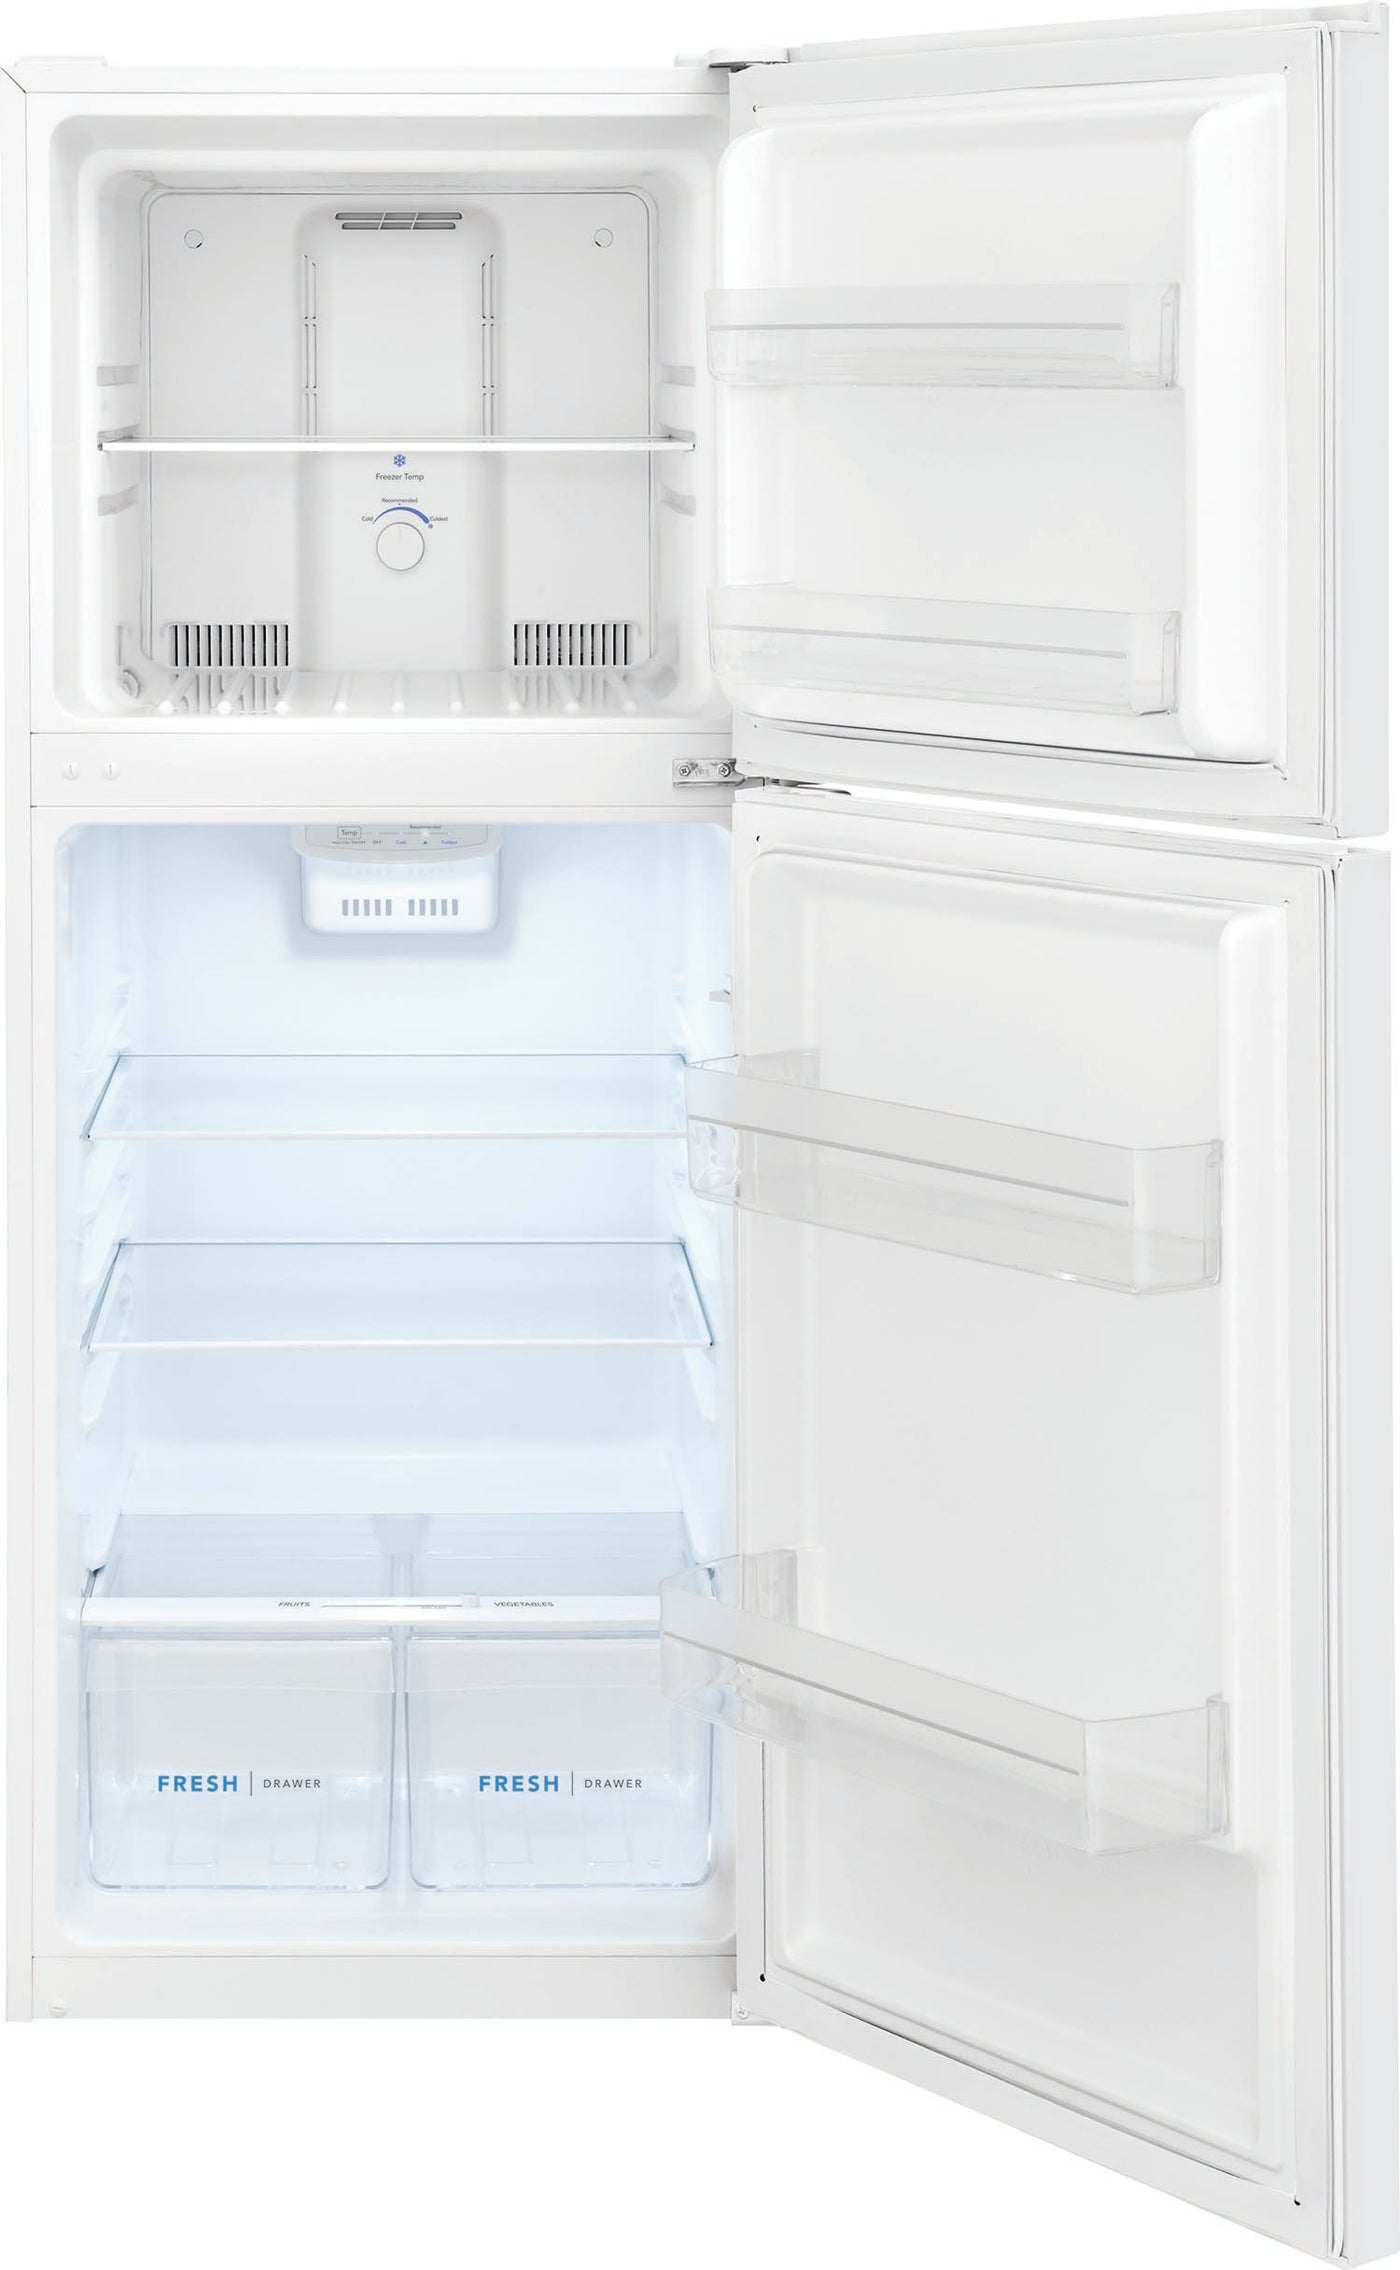 Frigidaire White Apartment Size Refrigerator with Top Freezer ( 10.1 Cu. Ft) - FFET1022UW